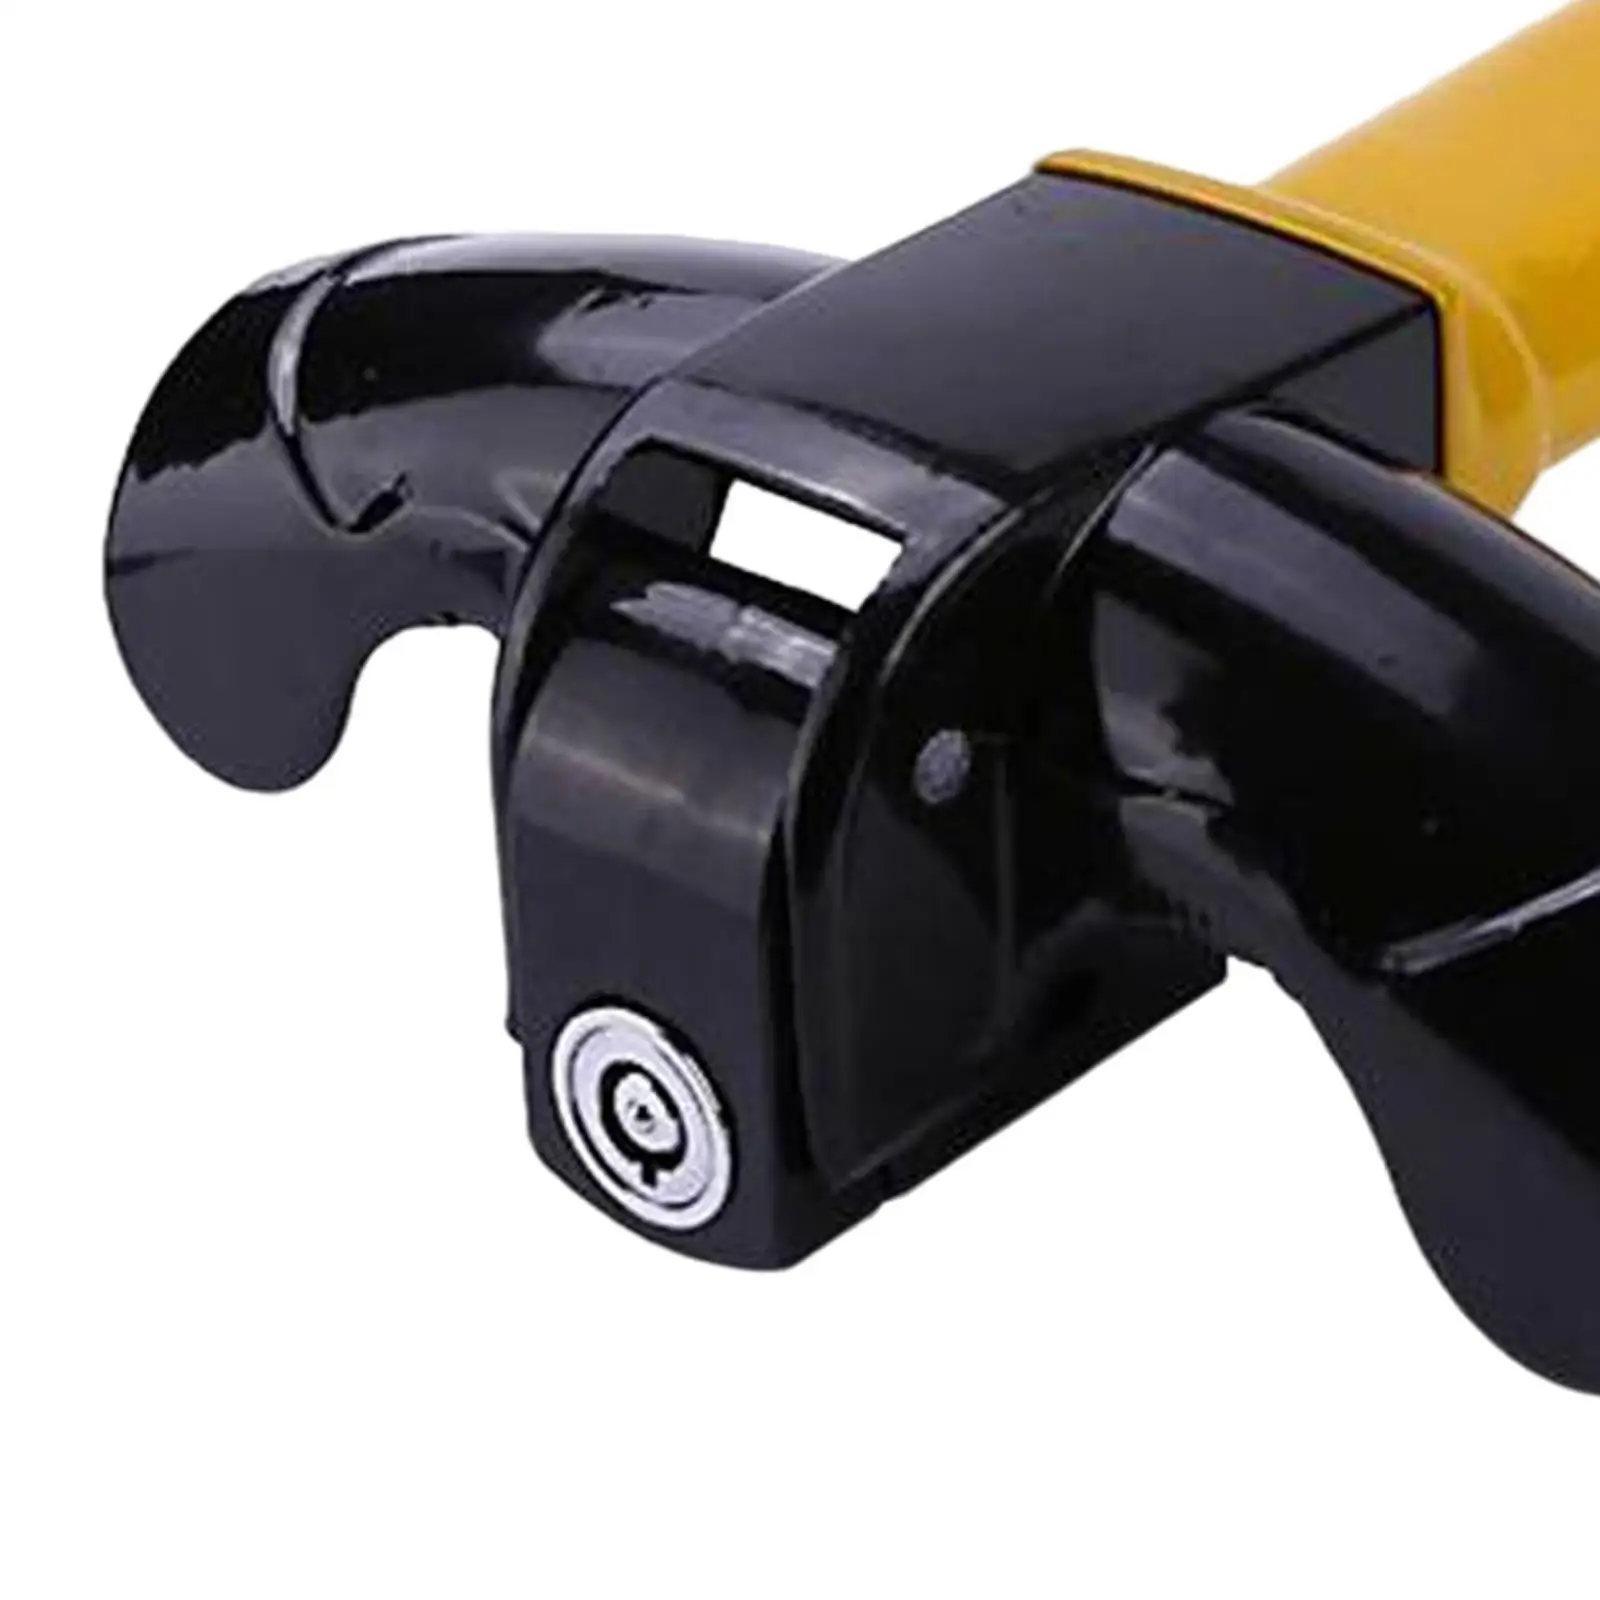 Universal Steering Wheel Lock Tool with 2x Keys Comfortable Handle Anti Theft Security Lock T Shaped for Vehicles SUV Van